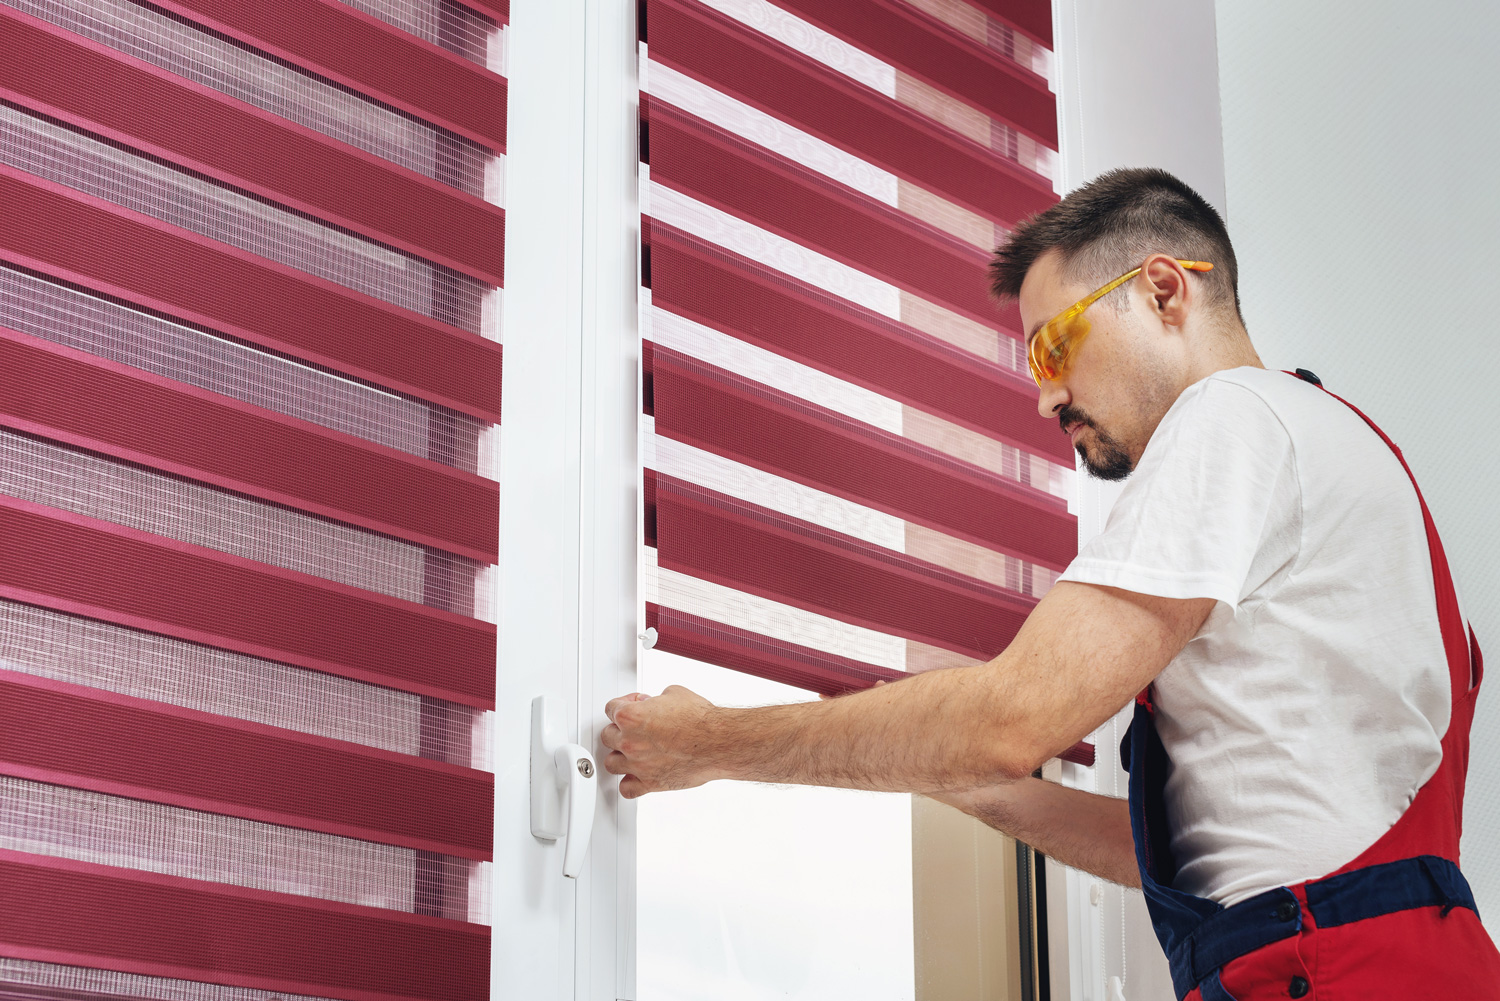 Construction worker man in a uniform installing new window blinds